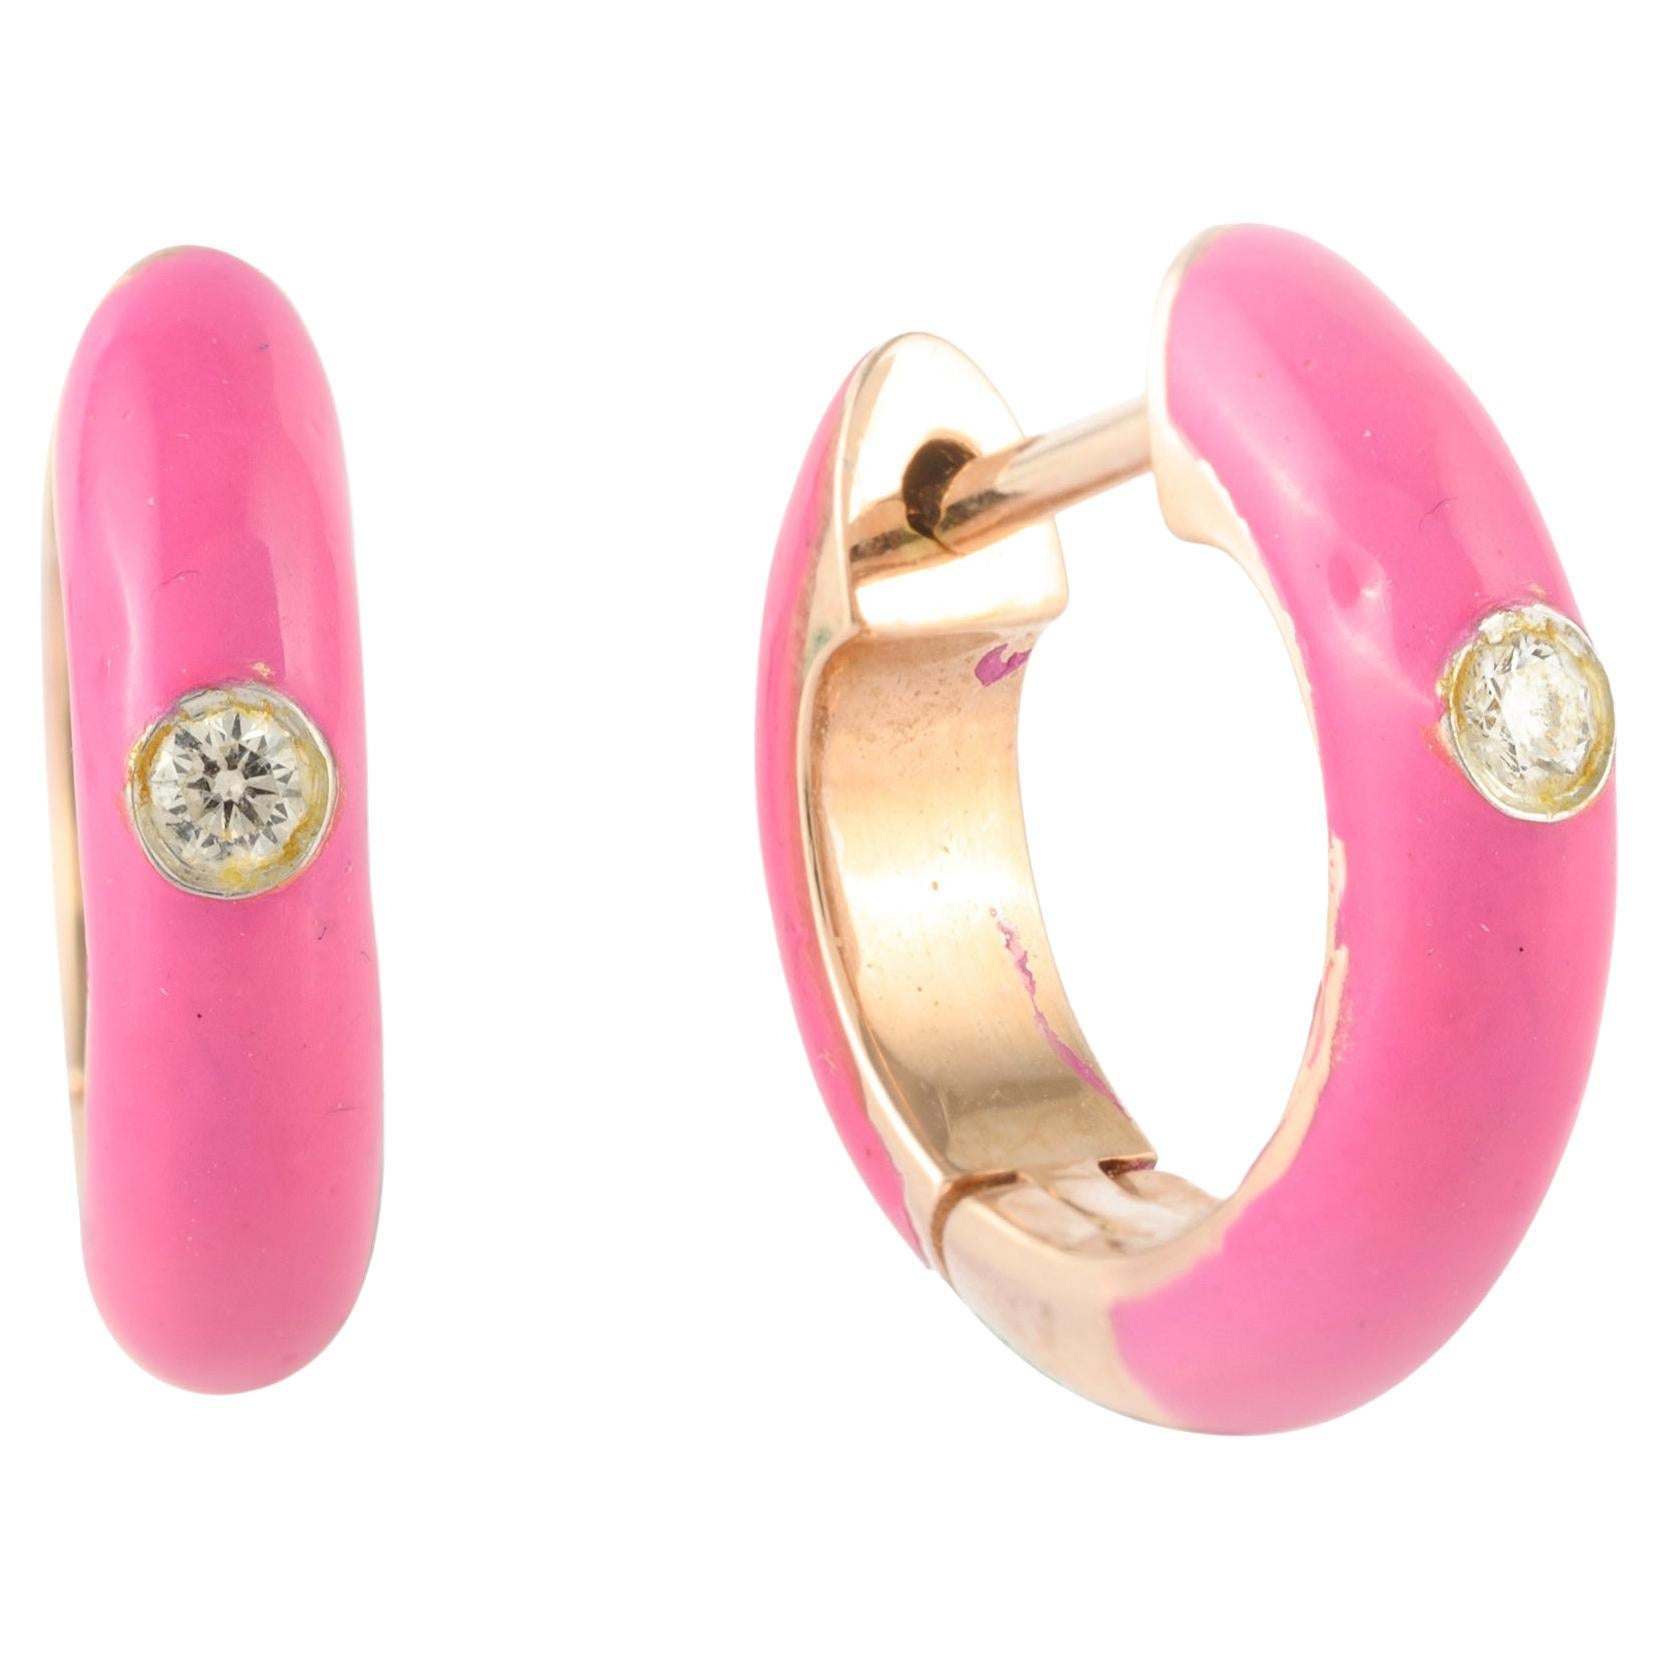 Moderne 14k solide Gelbgold rosa Emaille Clip-On Huggie Ohrringe mit Diamanten